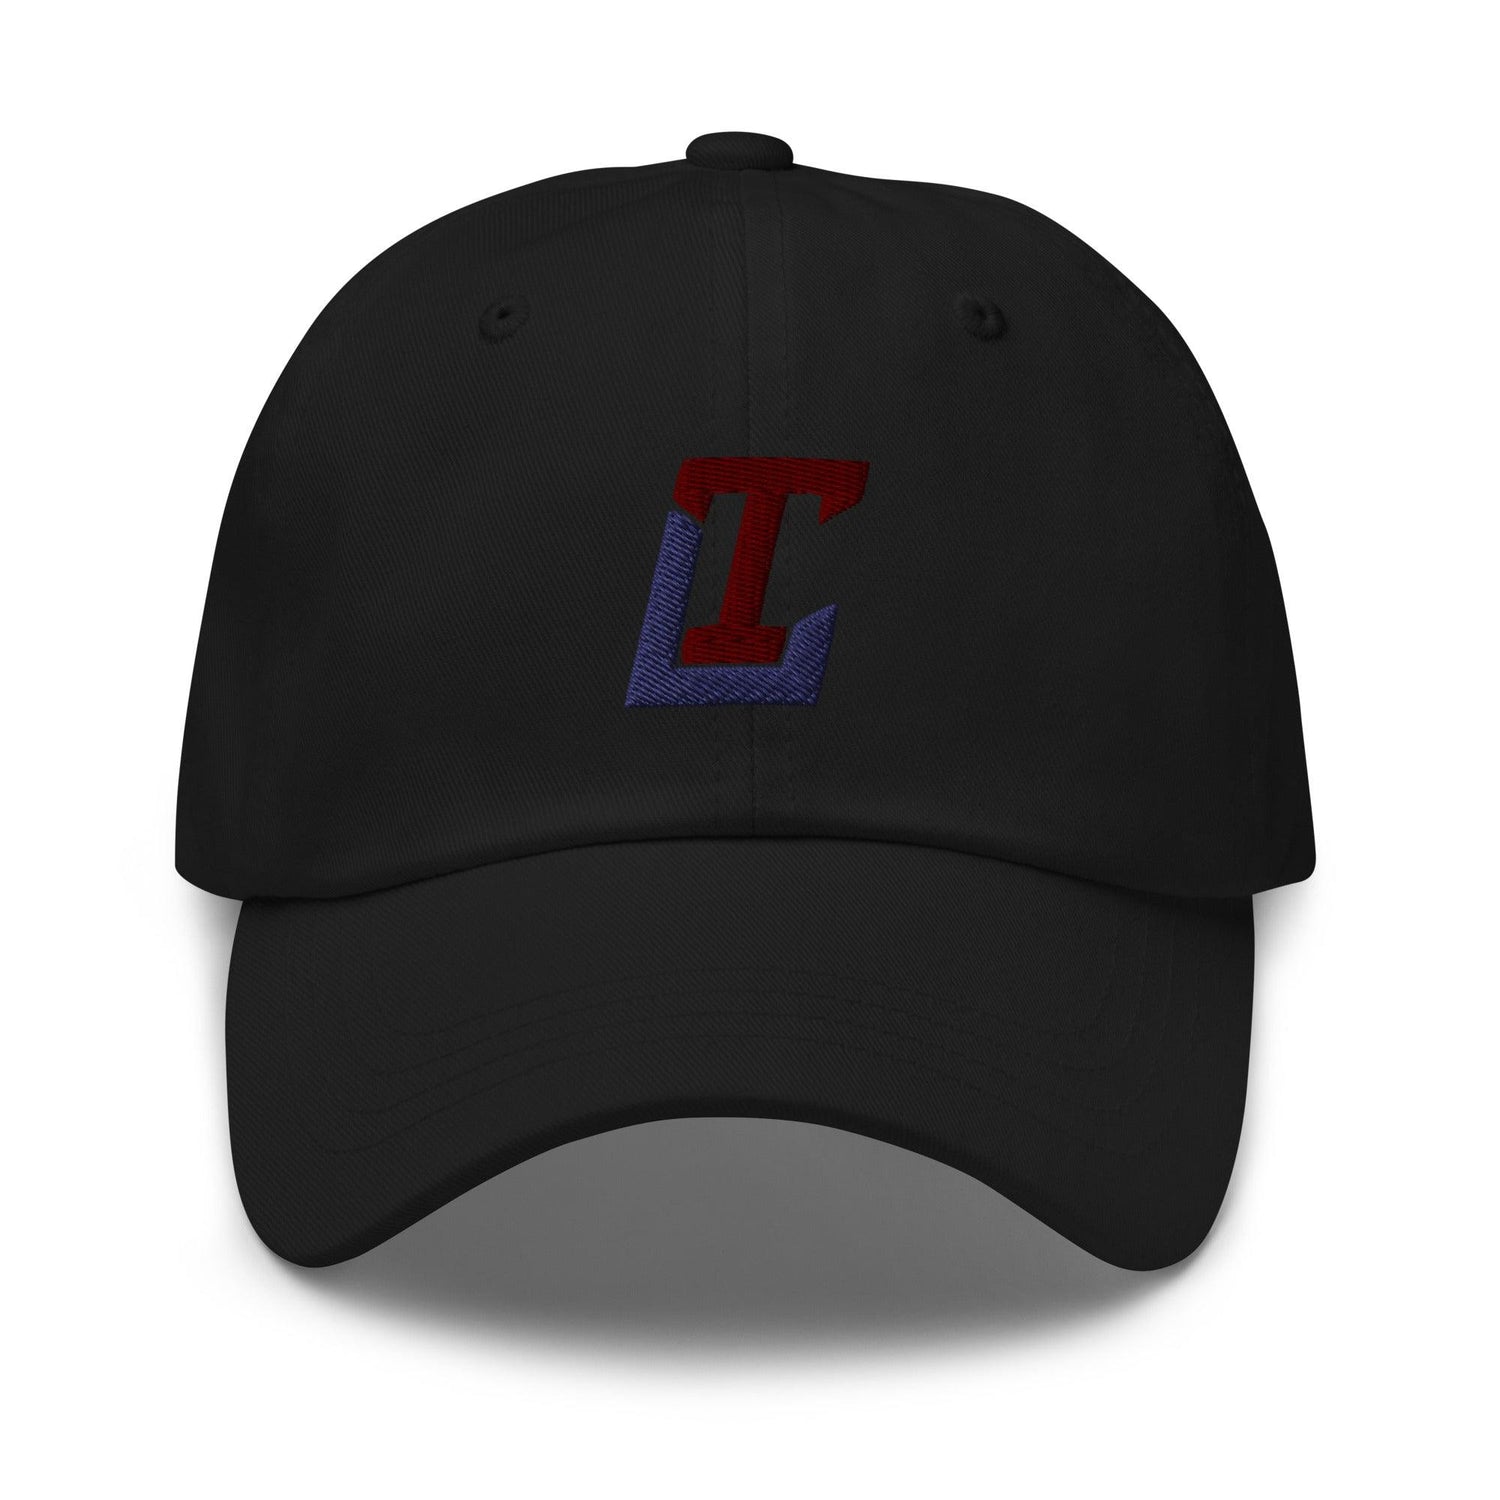 Lane Thomas "Signature" hat - Fan Arch